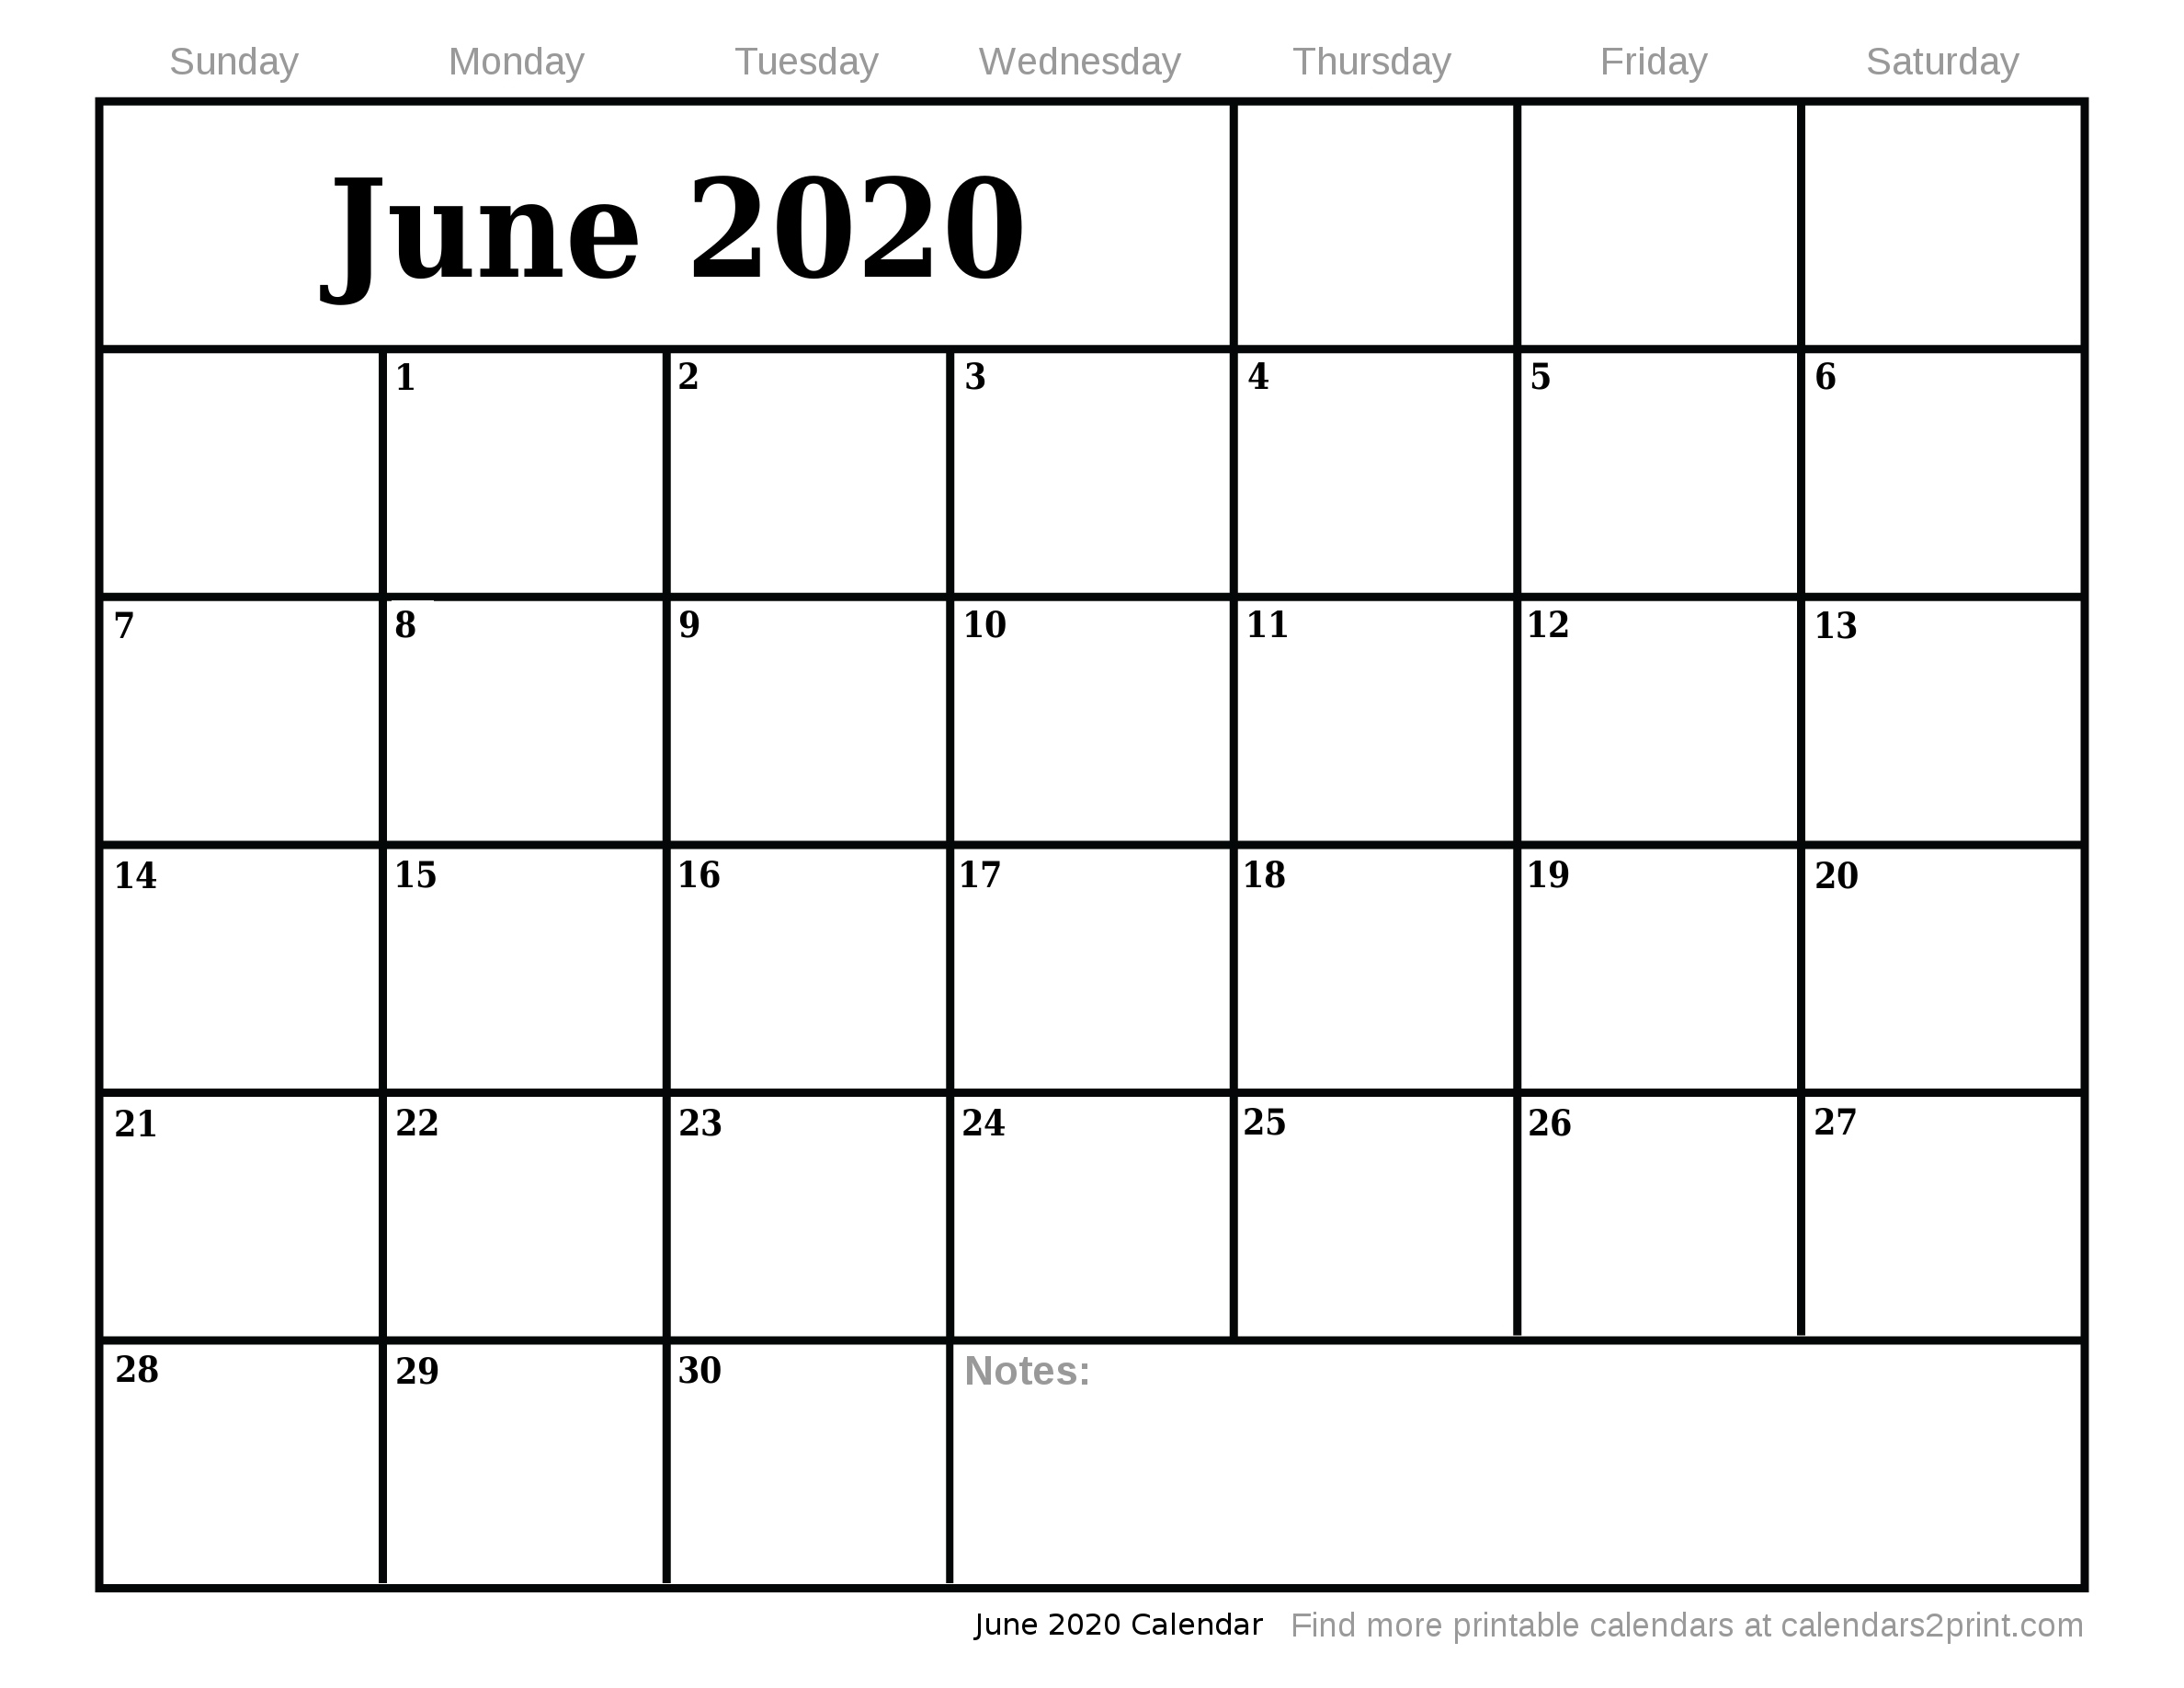 Jun 2020 Printable Calendar